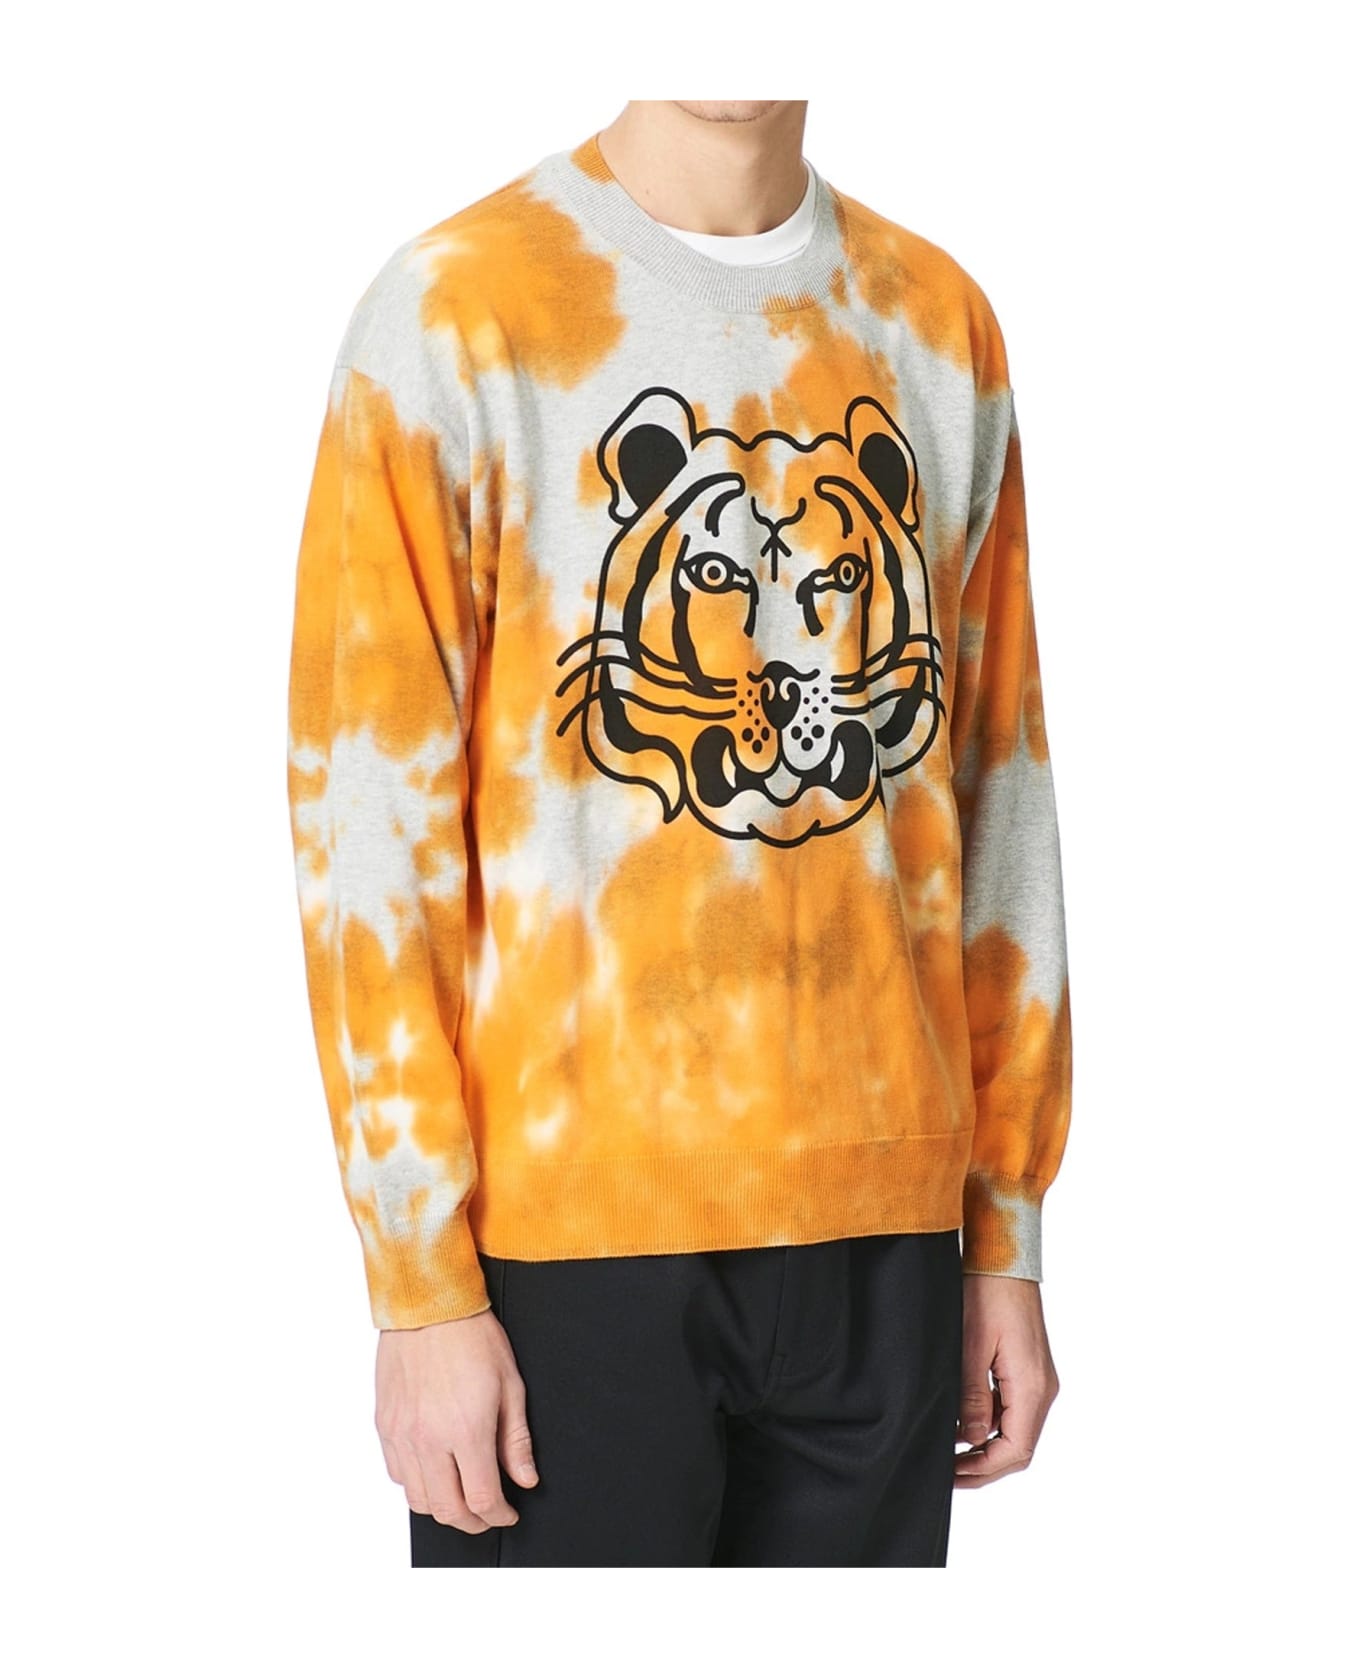 Kenzo Tie Dye Tiger Sweater - Orange